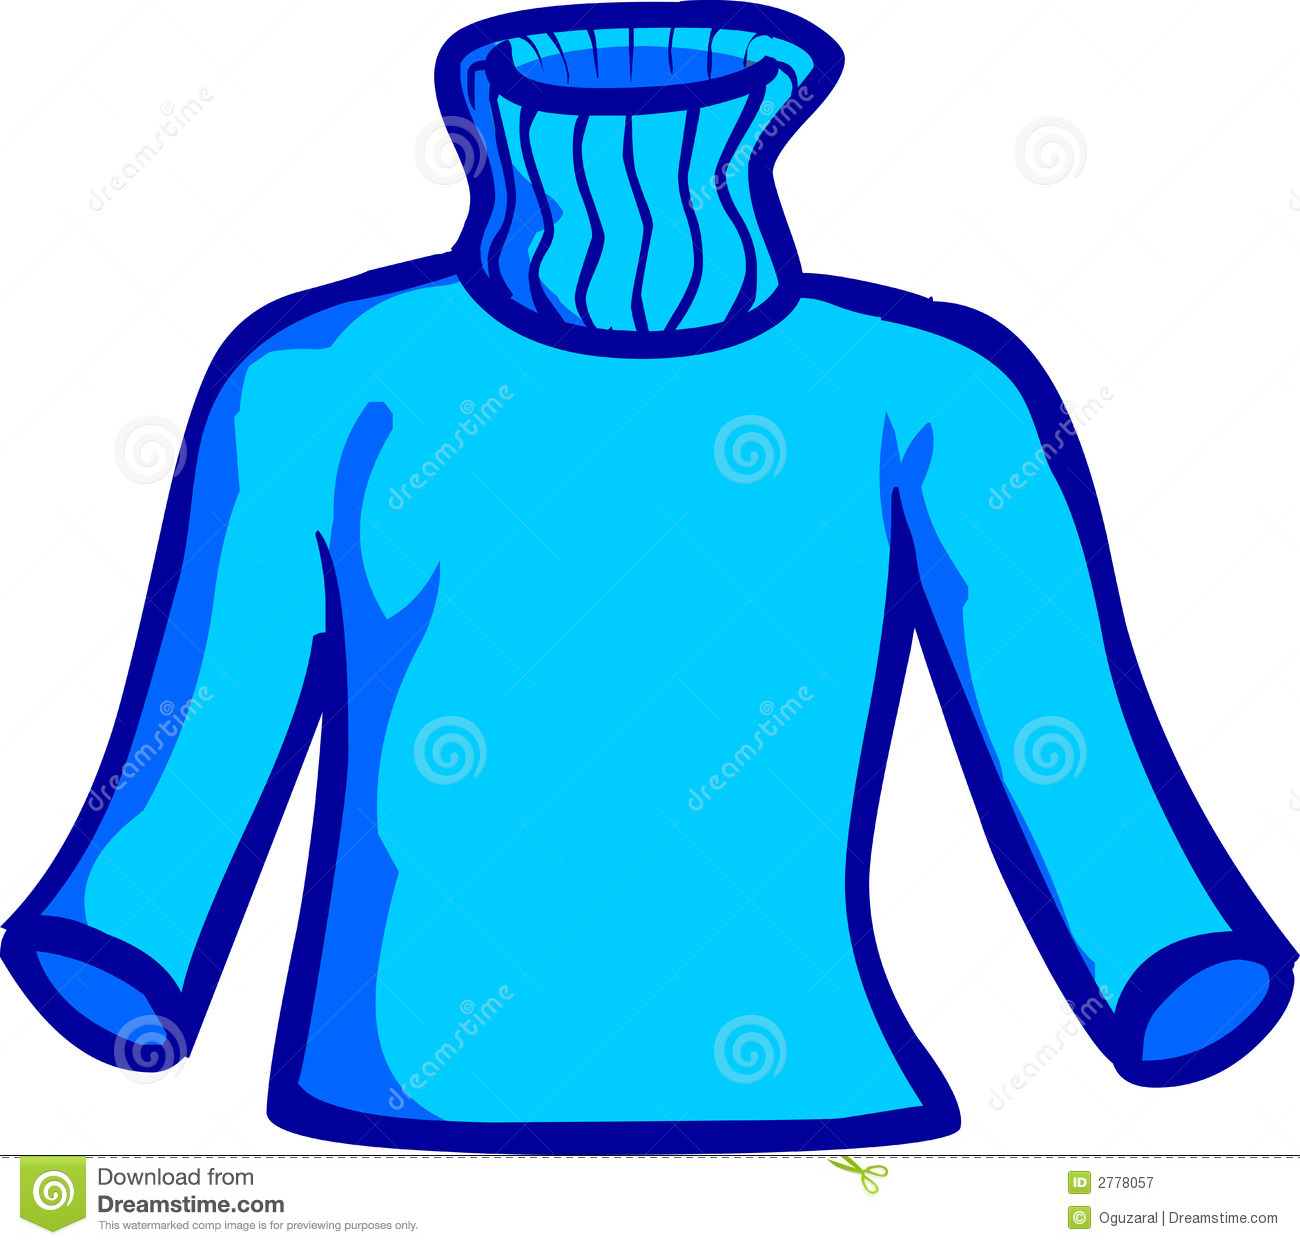 Turtleneck sweater clipart